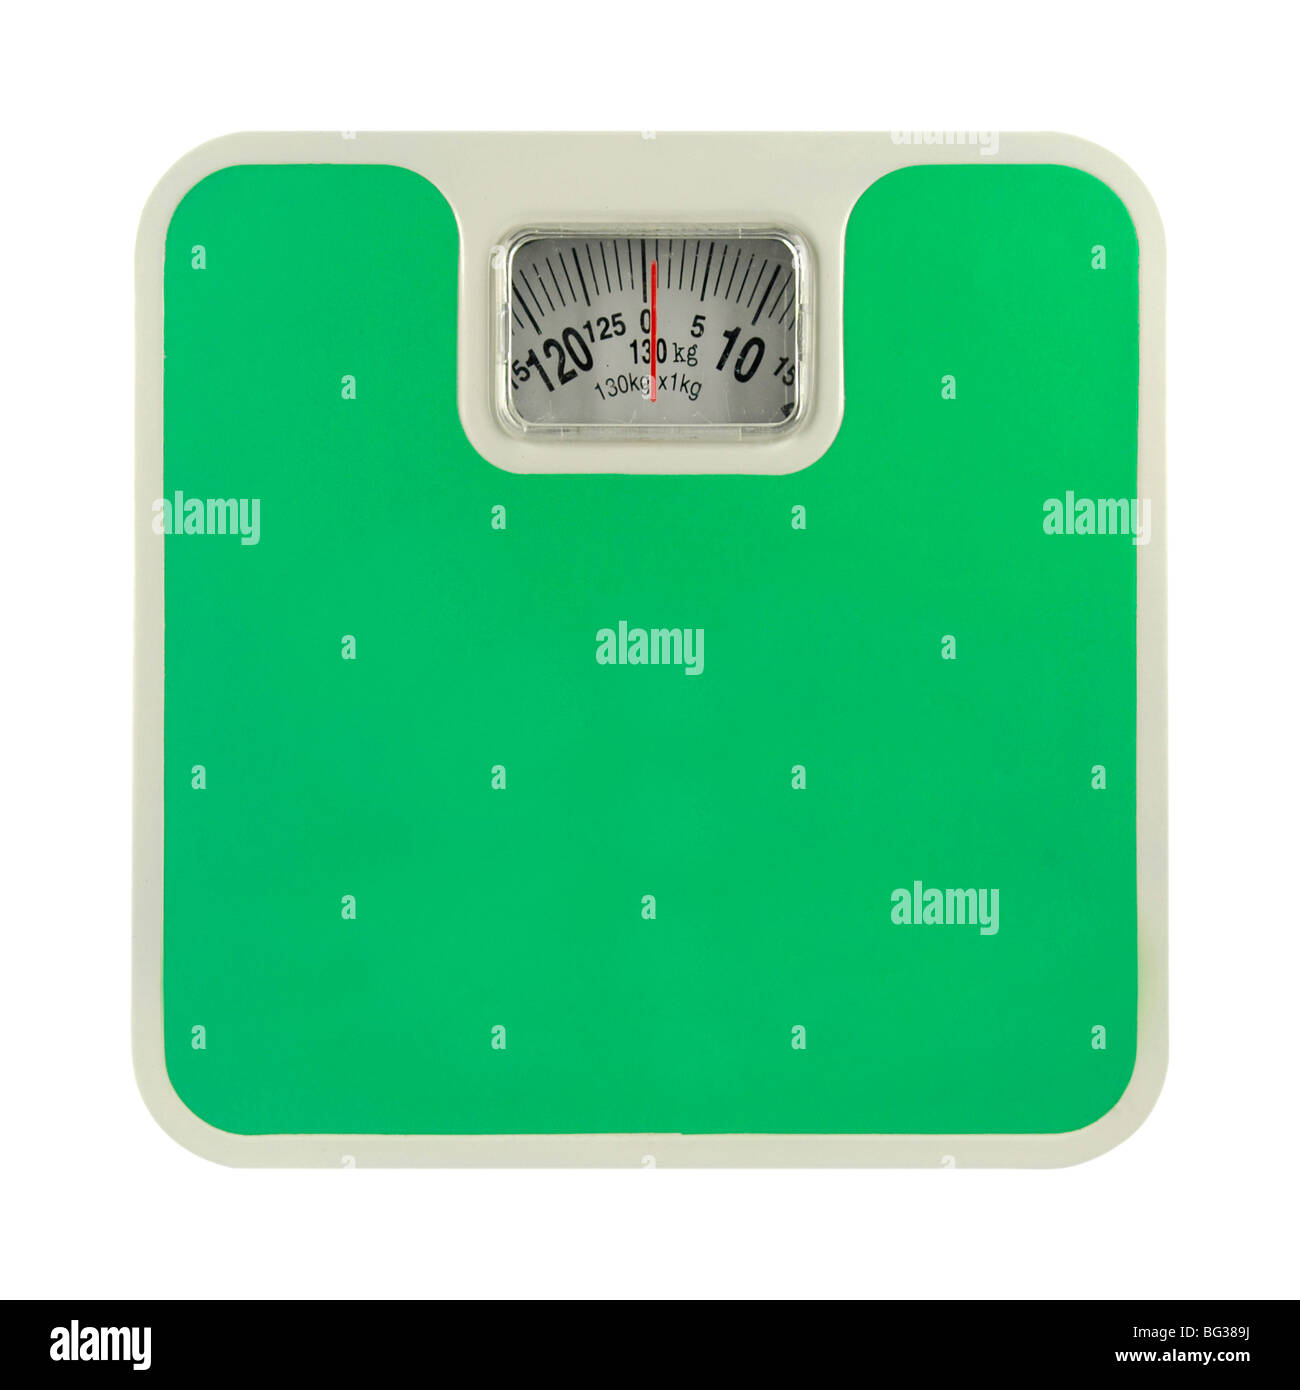 https://c8.alamy.com/comp/BG389J/bathroom-weight-scales-BG389J.jpg